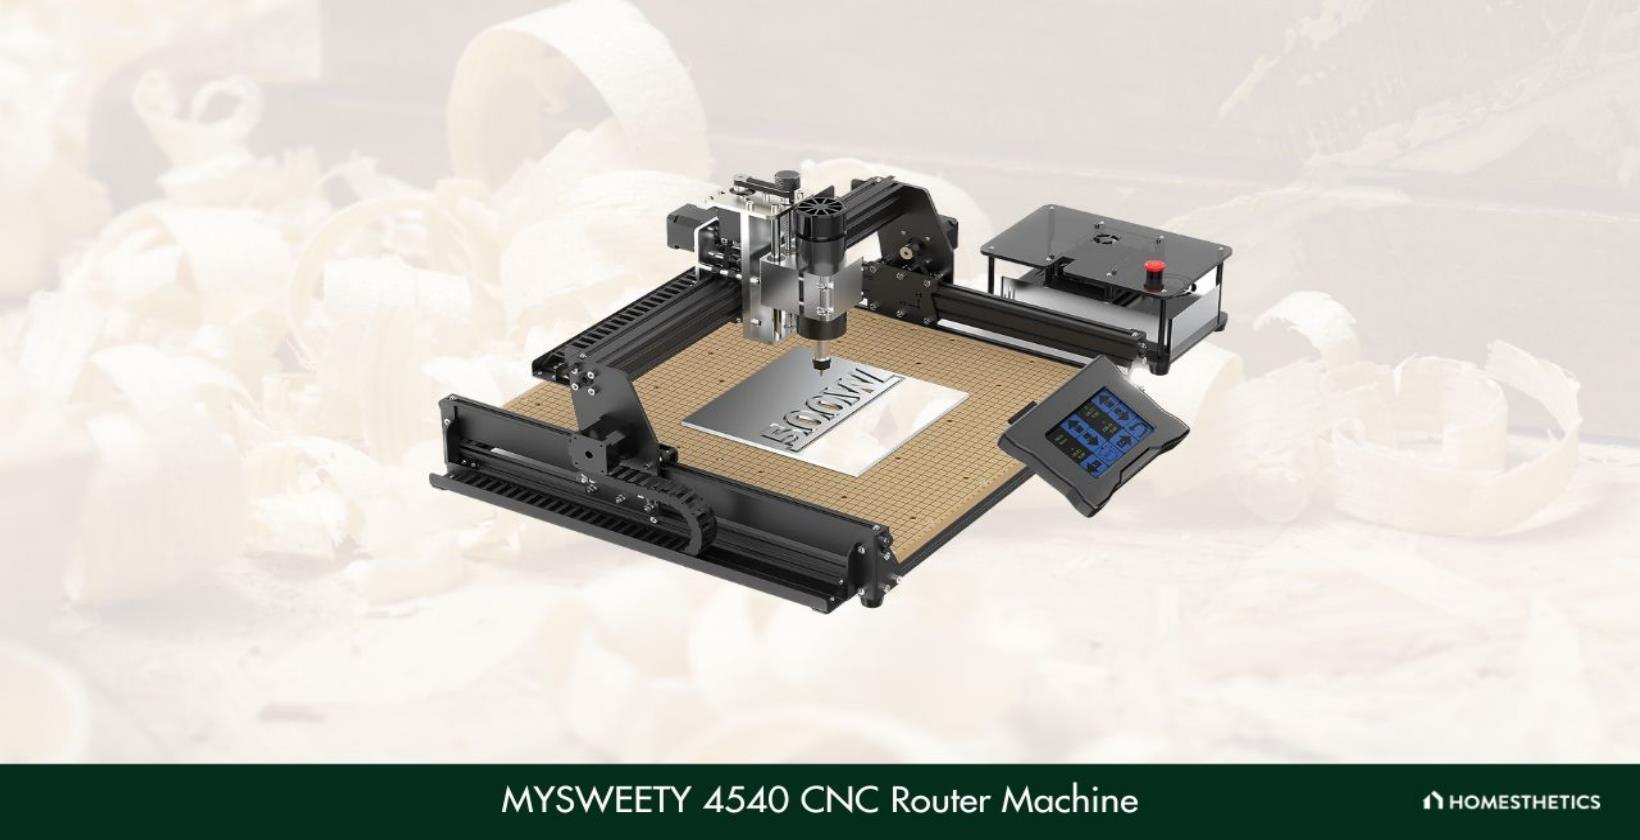 3. MYSWEETY 4540 CNC Router Machine